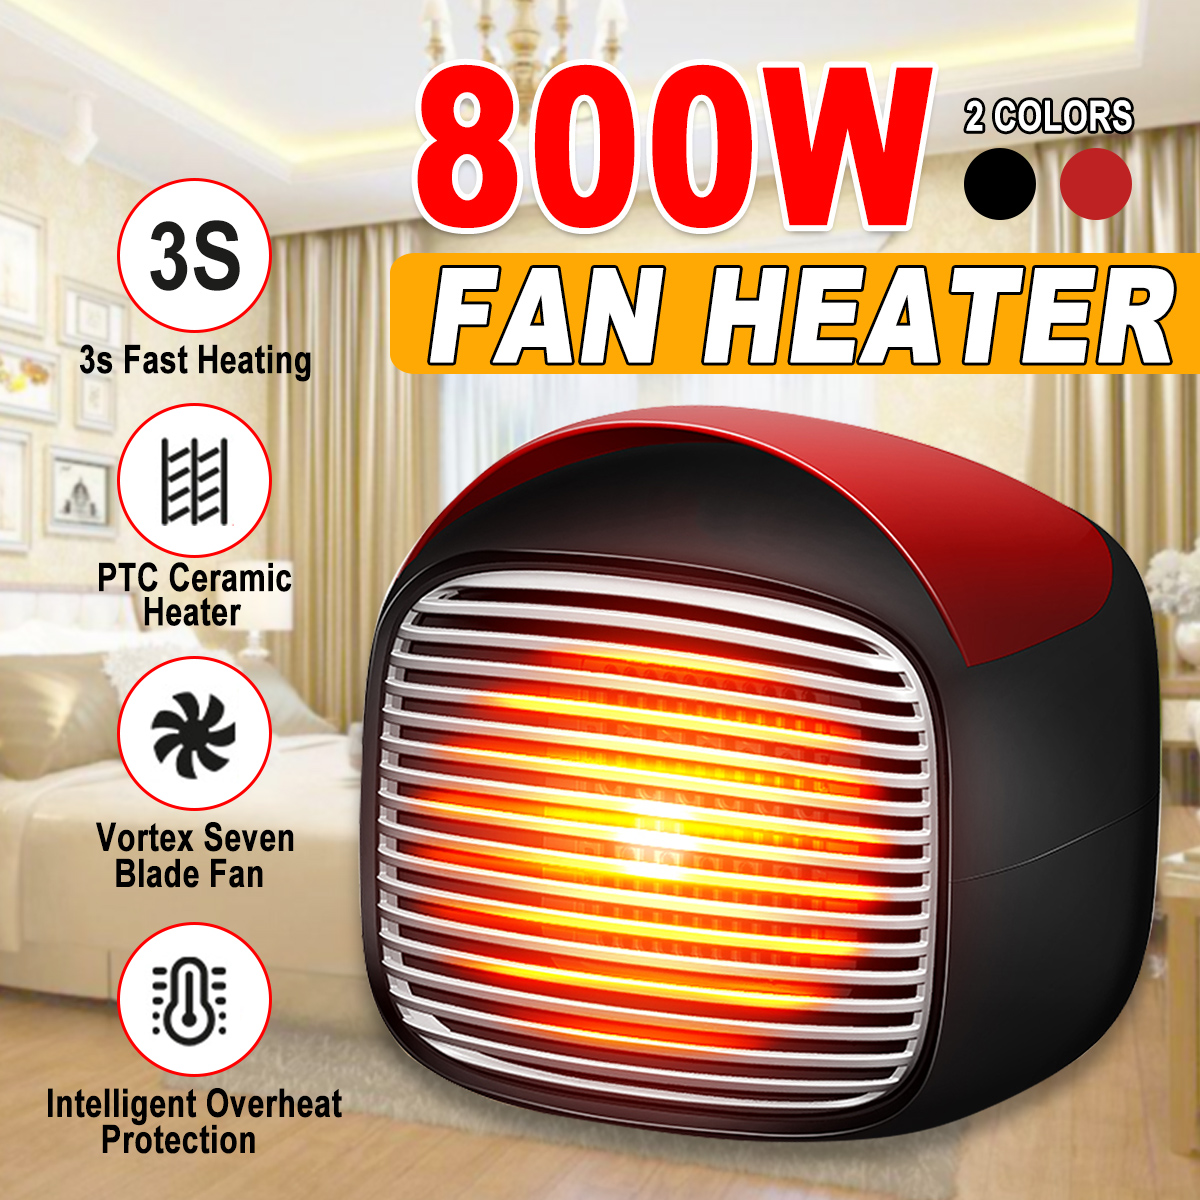 800W-Portable-Electric-Heater-Mini-Ceramic-Hot-Air-Heating-Fan-Winter-Home-Space-Warmer-1610147-1